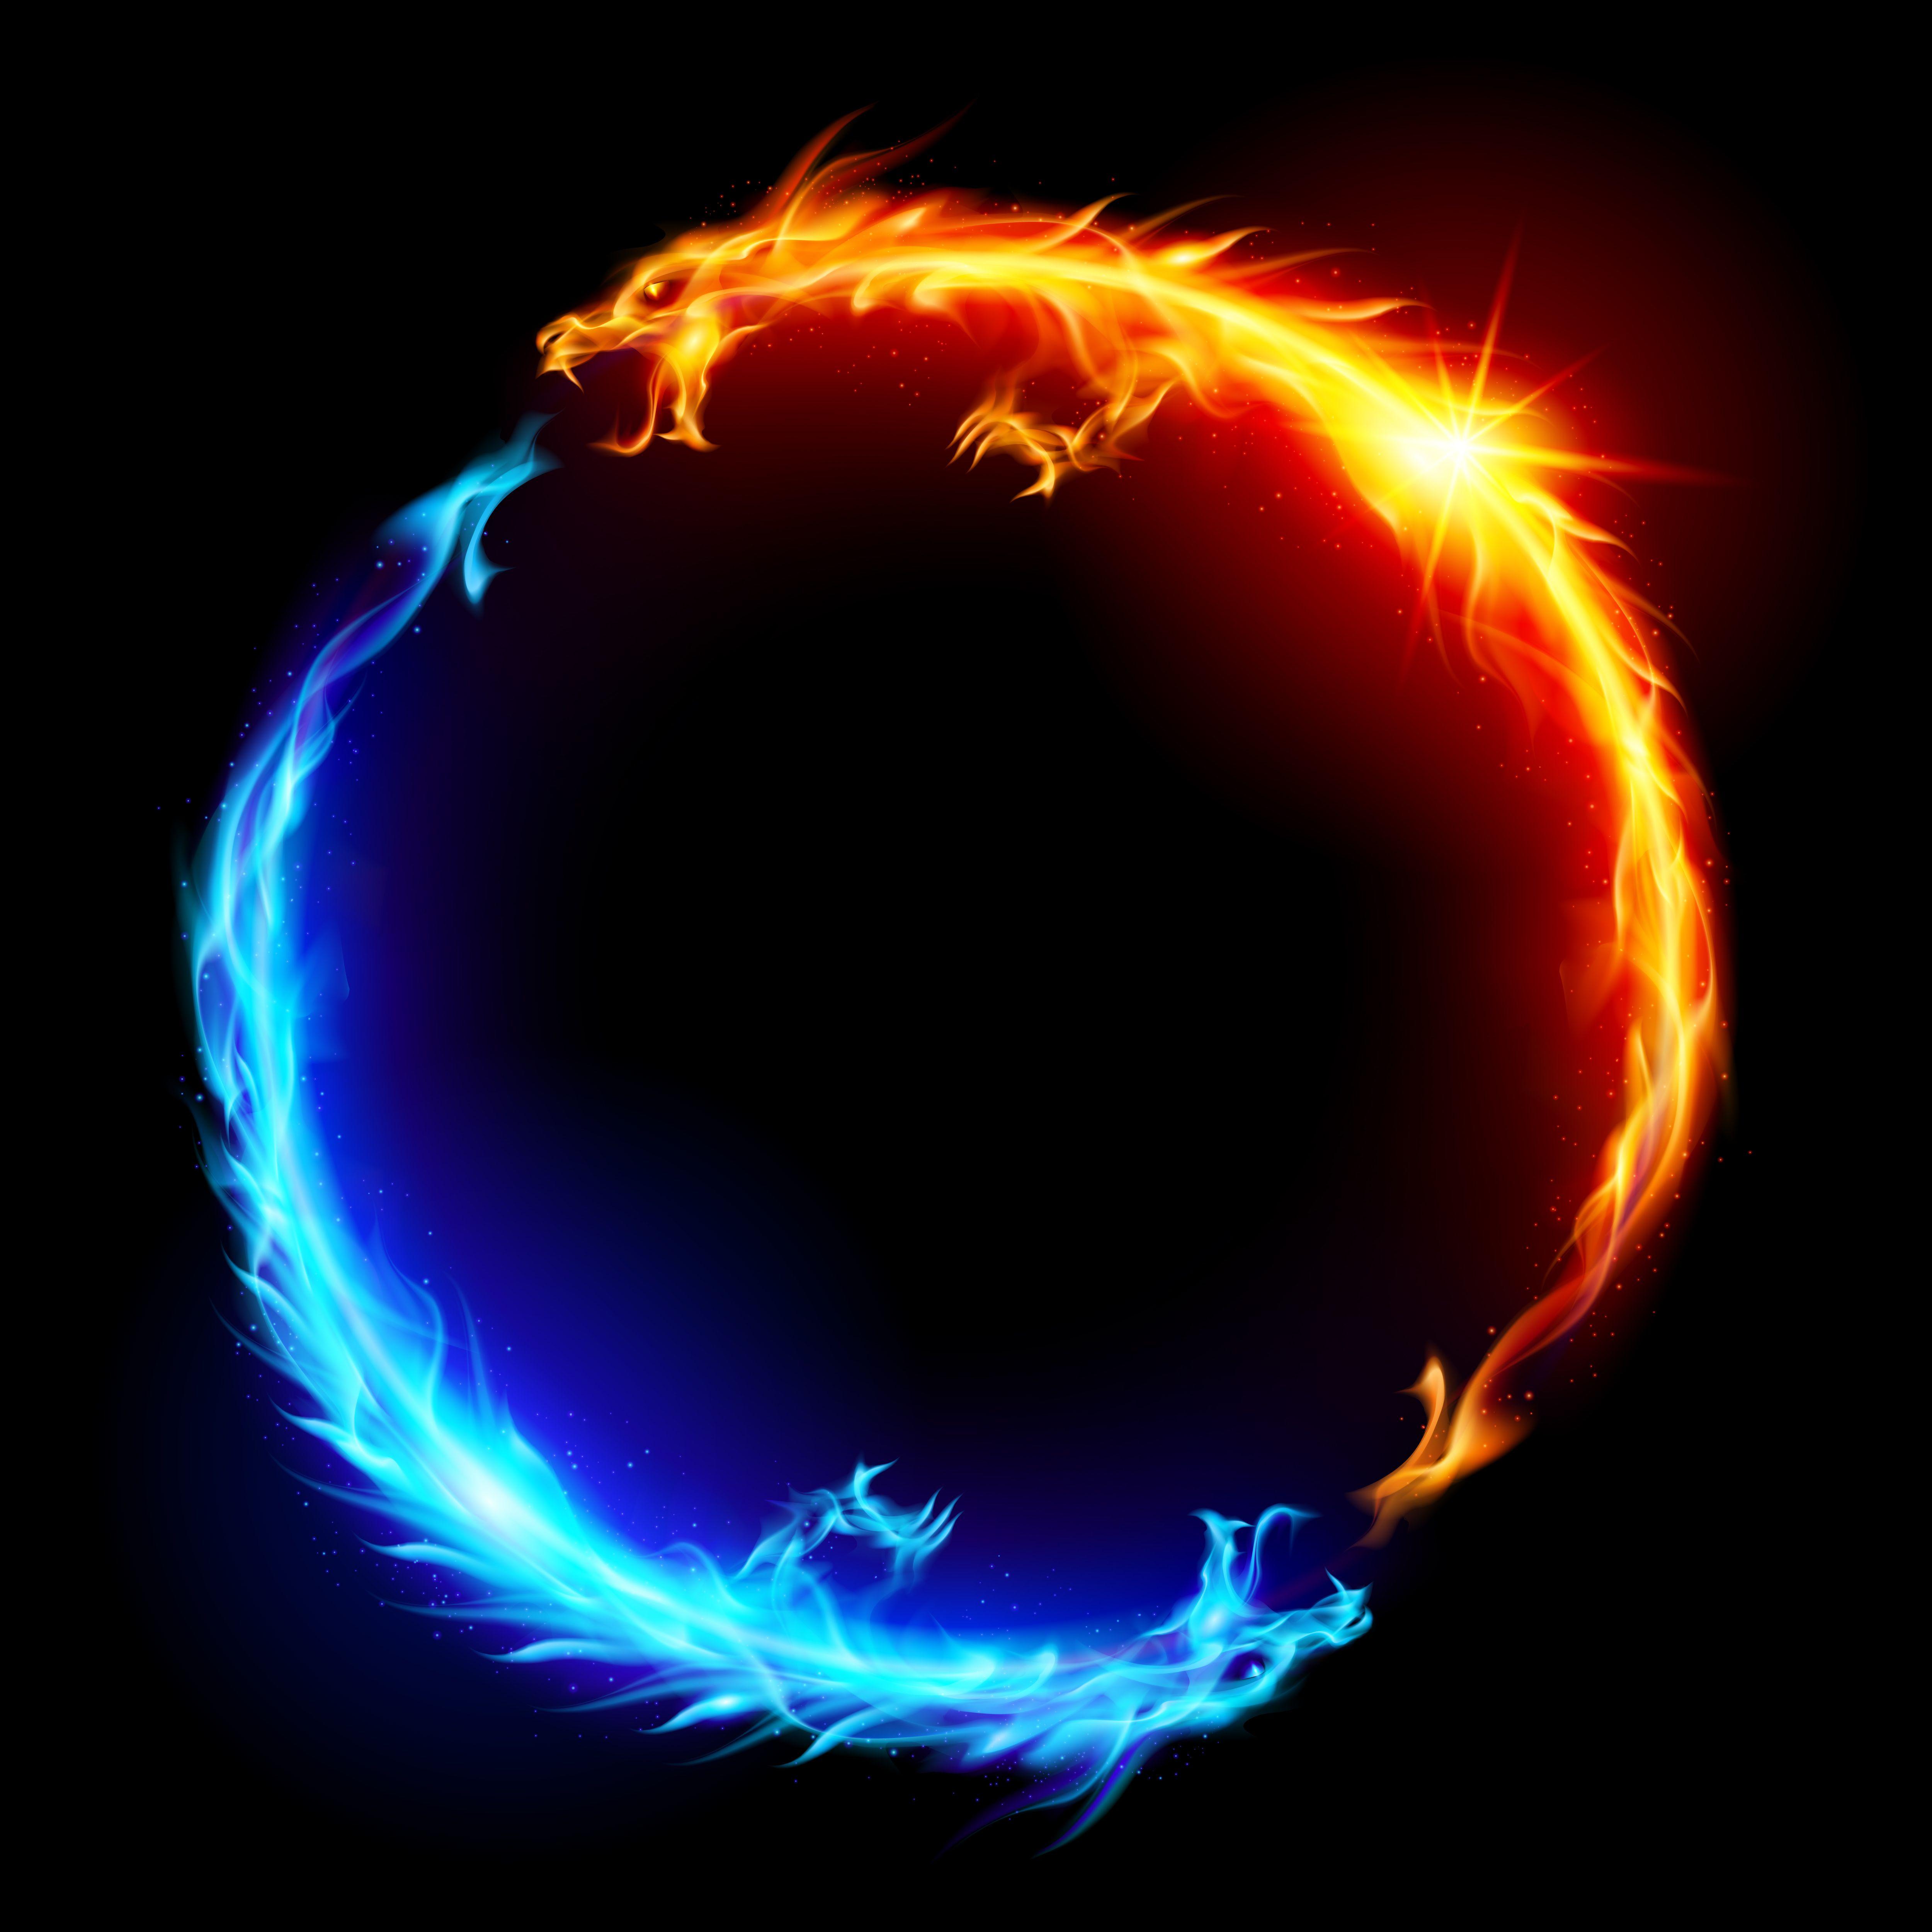 Flame art, Fire art, Black background image